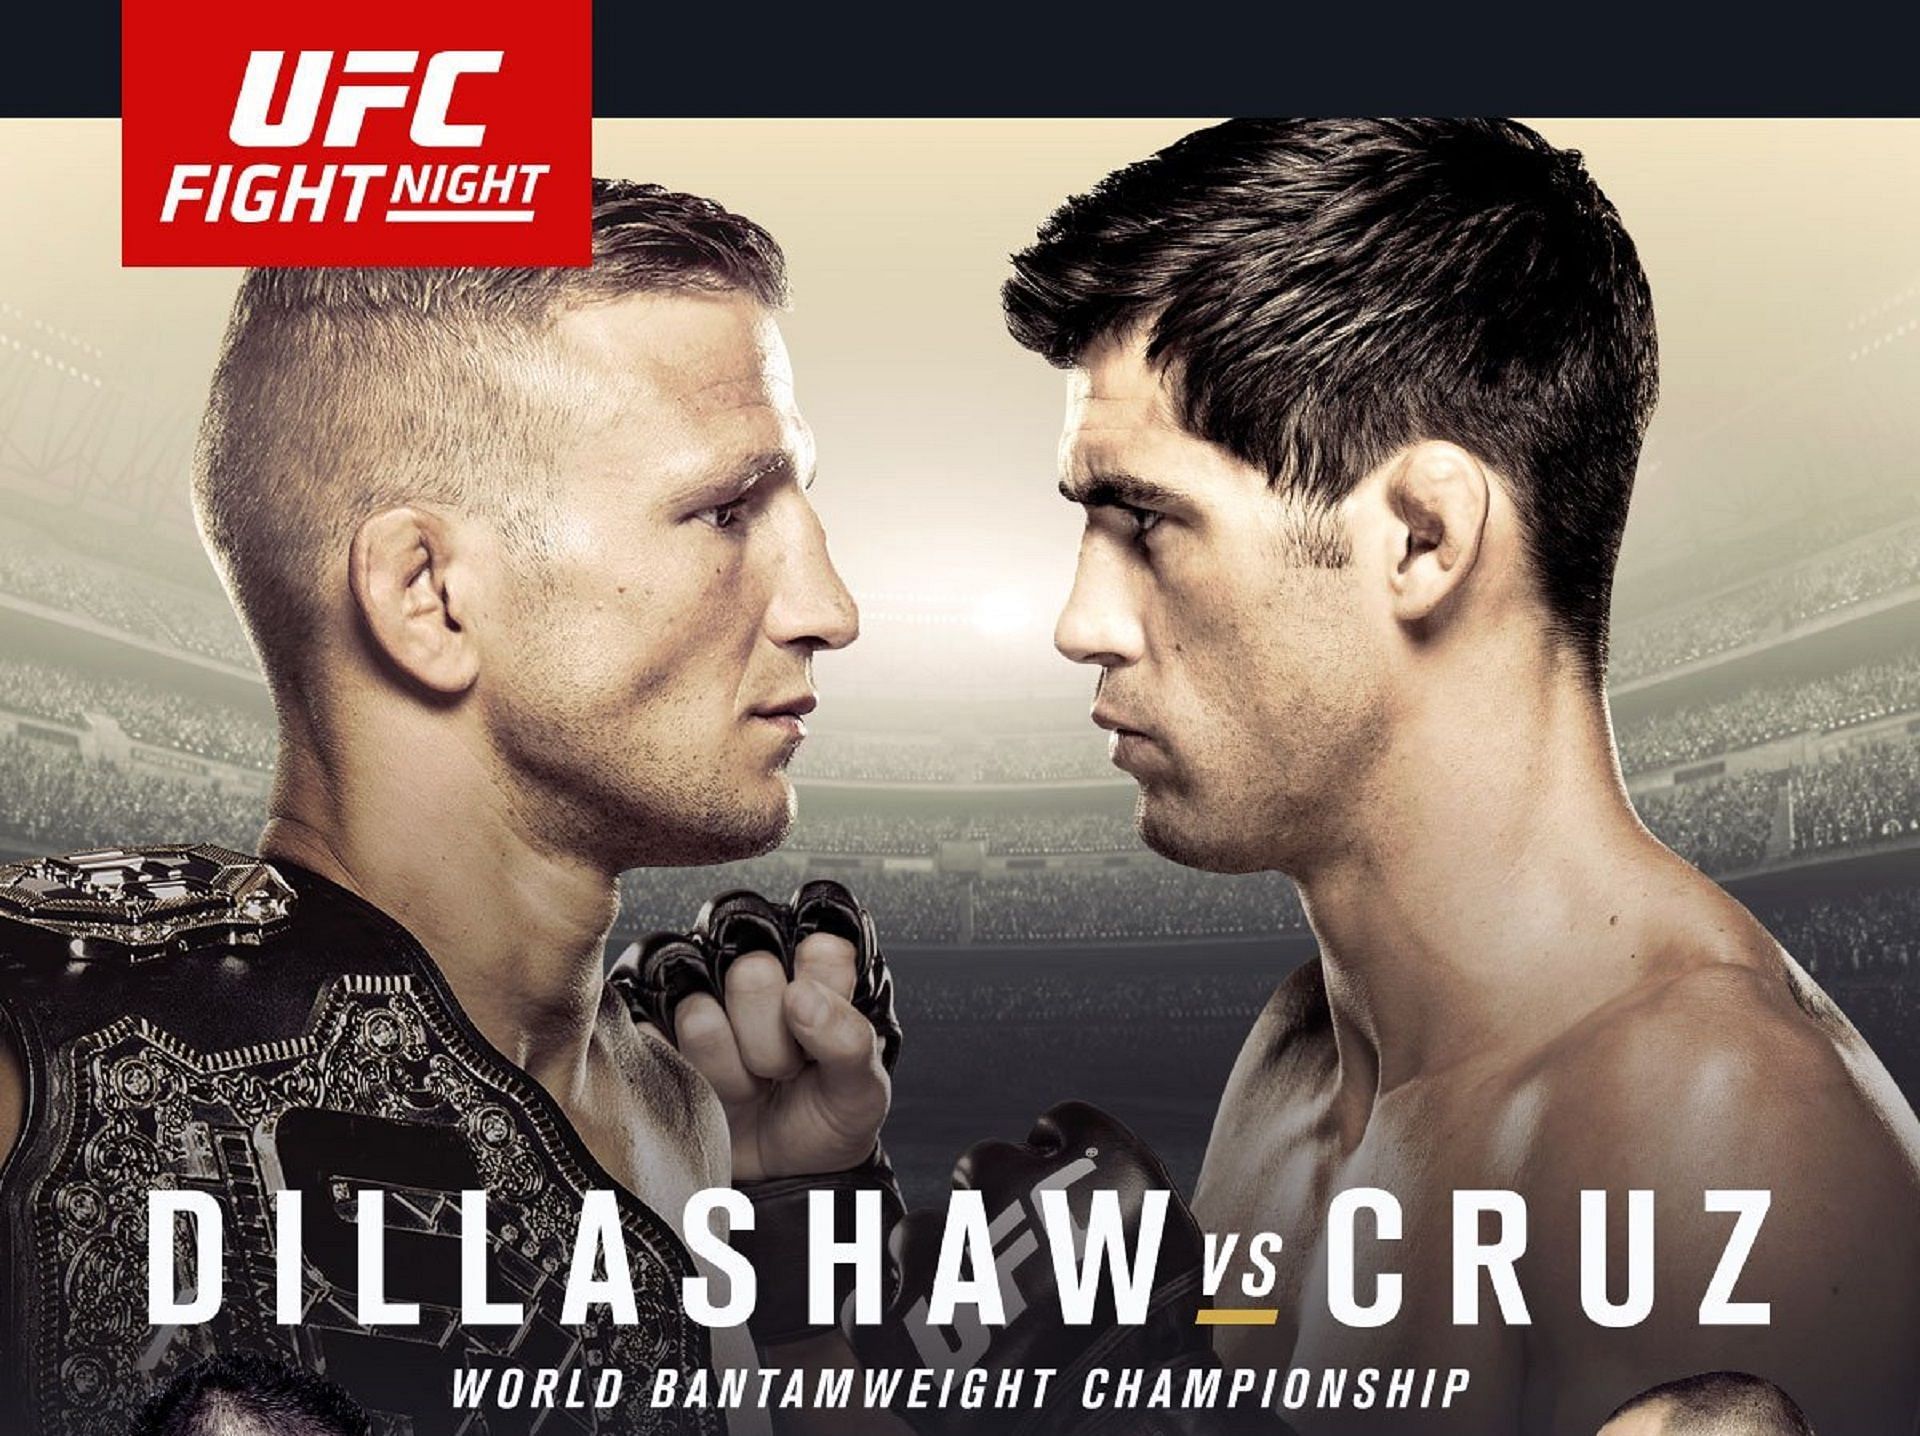 UFC Fight Night 81 poster [Image via @ufc on Twitter]